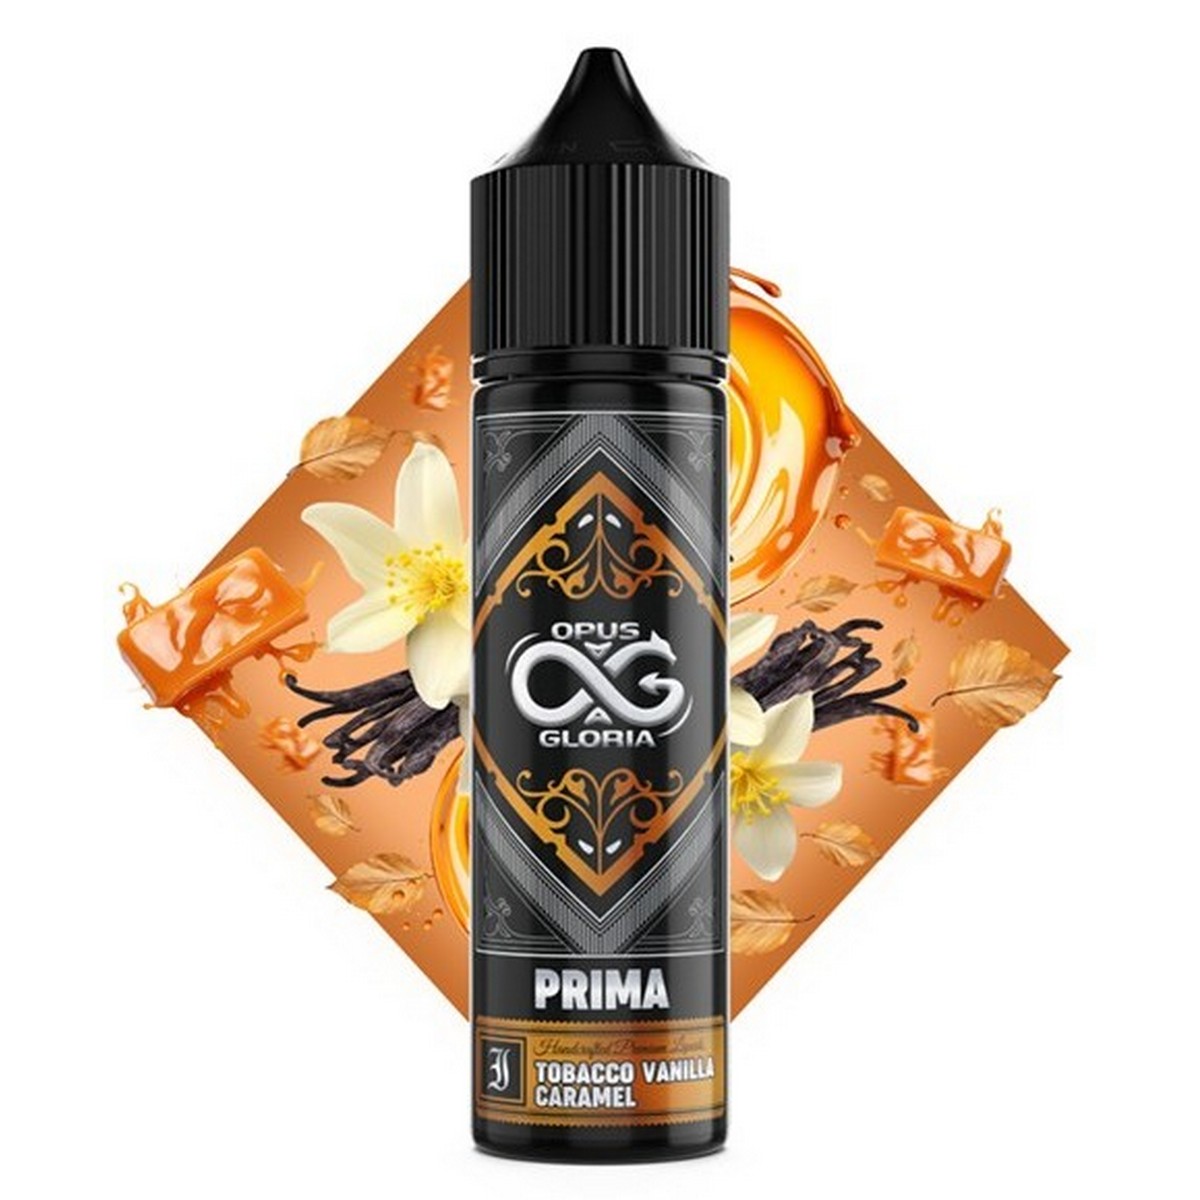 Opus Gloria Prima Flavor Shot Tobacco Vanilla Caramel 20ml/60ml